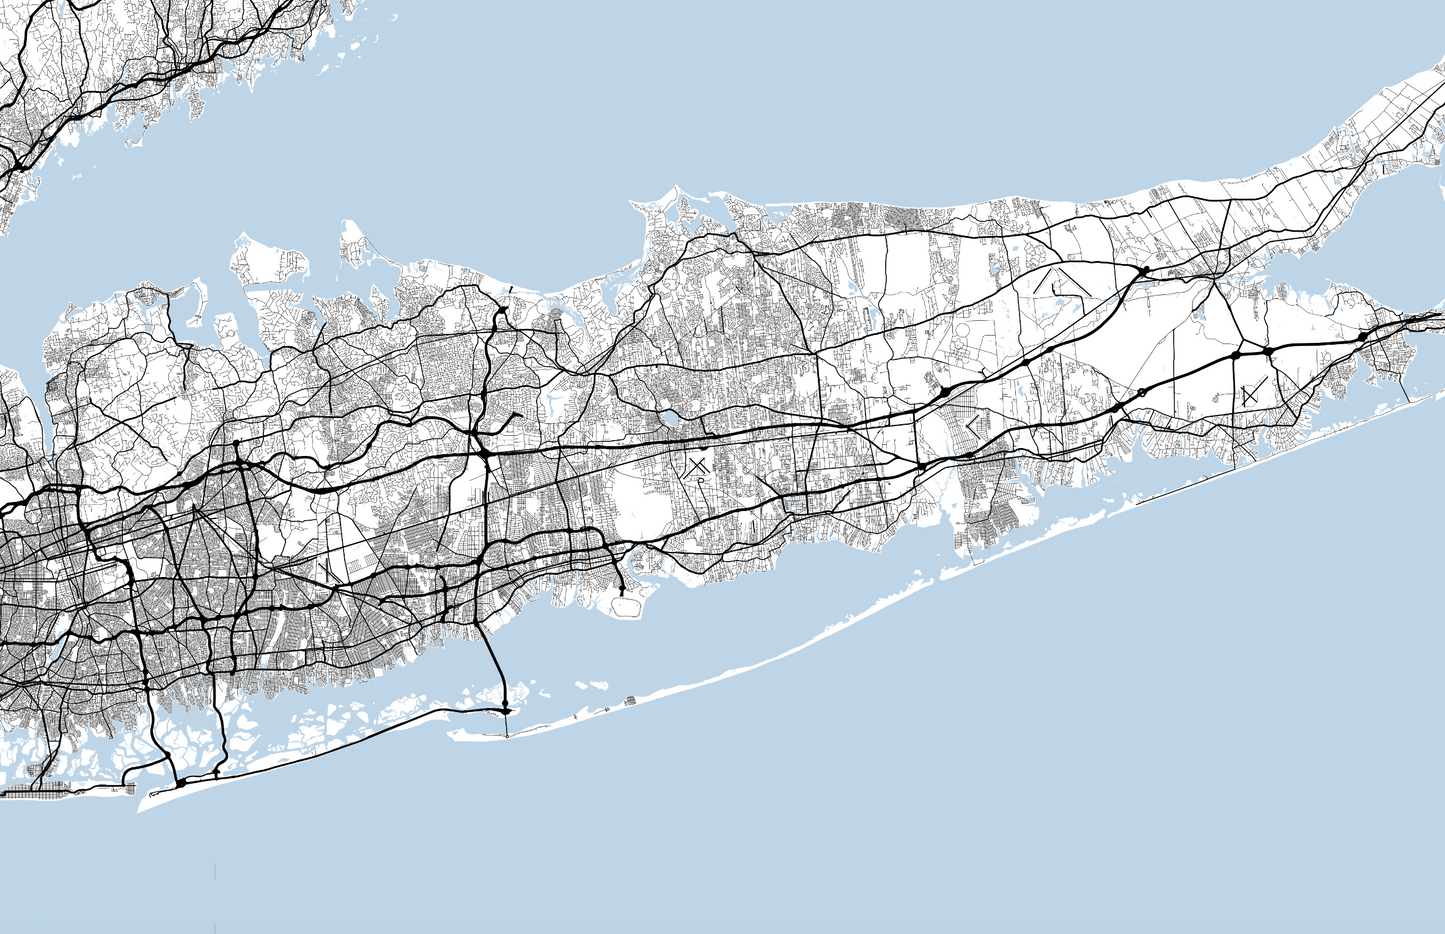 Long Island New York Map Print